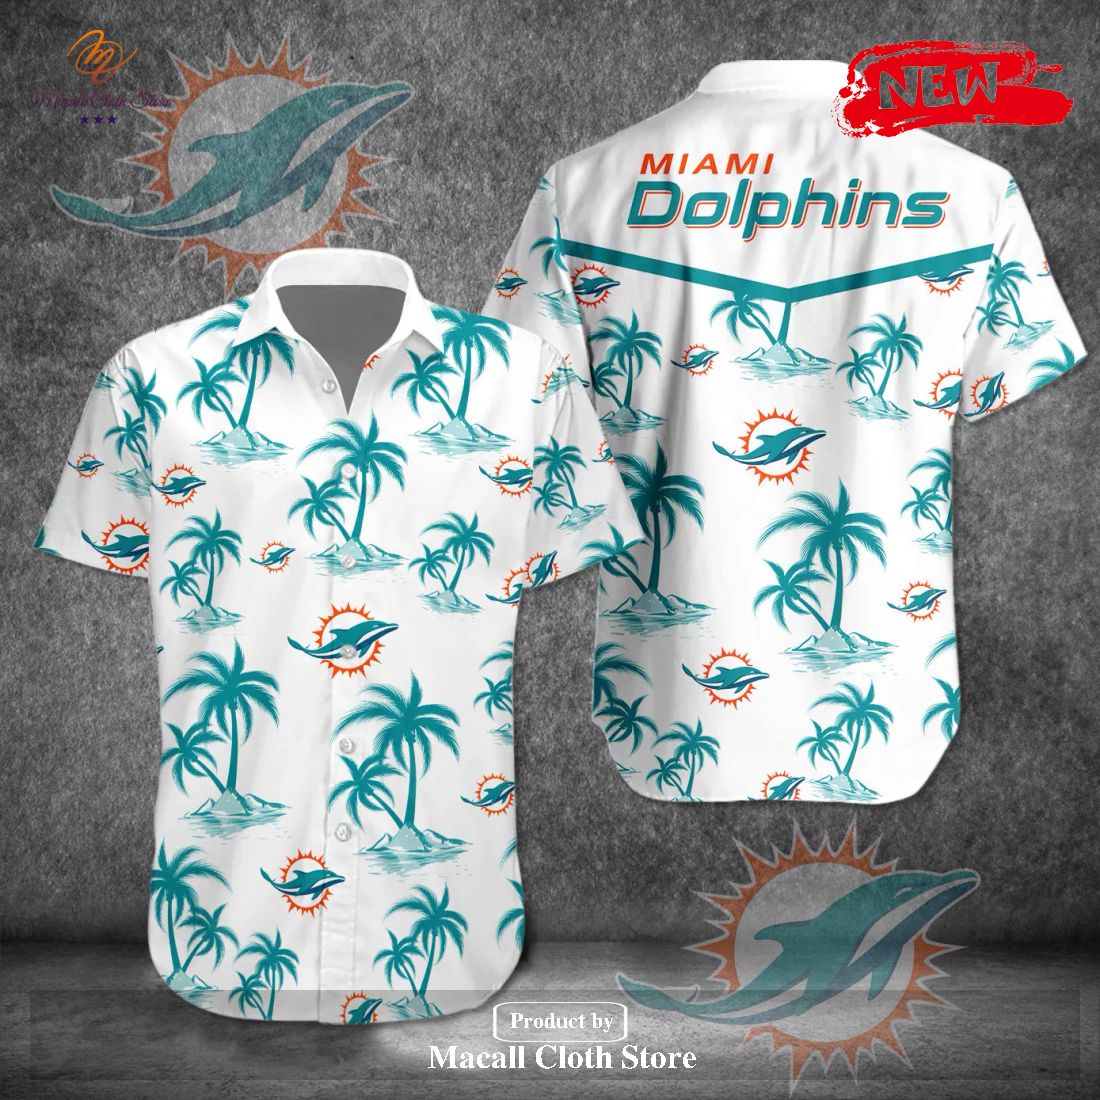 Miami Dolphins Shop - Miami Dolphins NFL Team Tropical Coconut Hot Summer Button Hawaiian Shirt